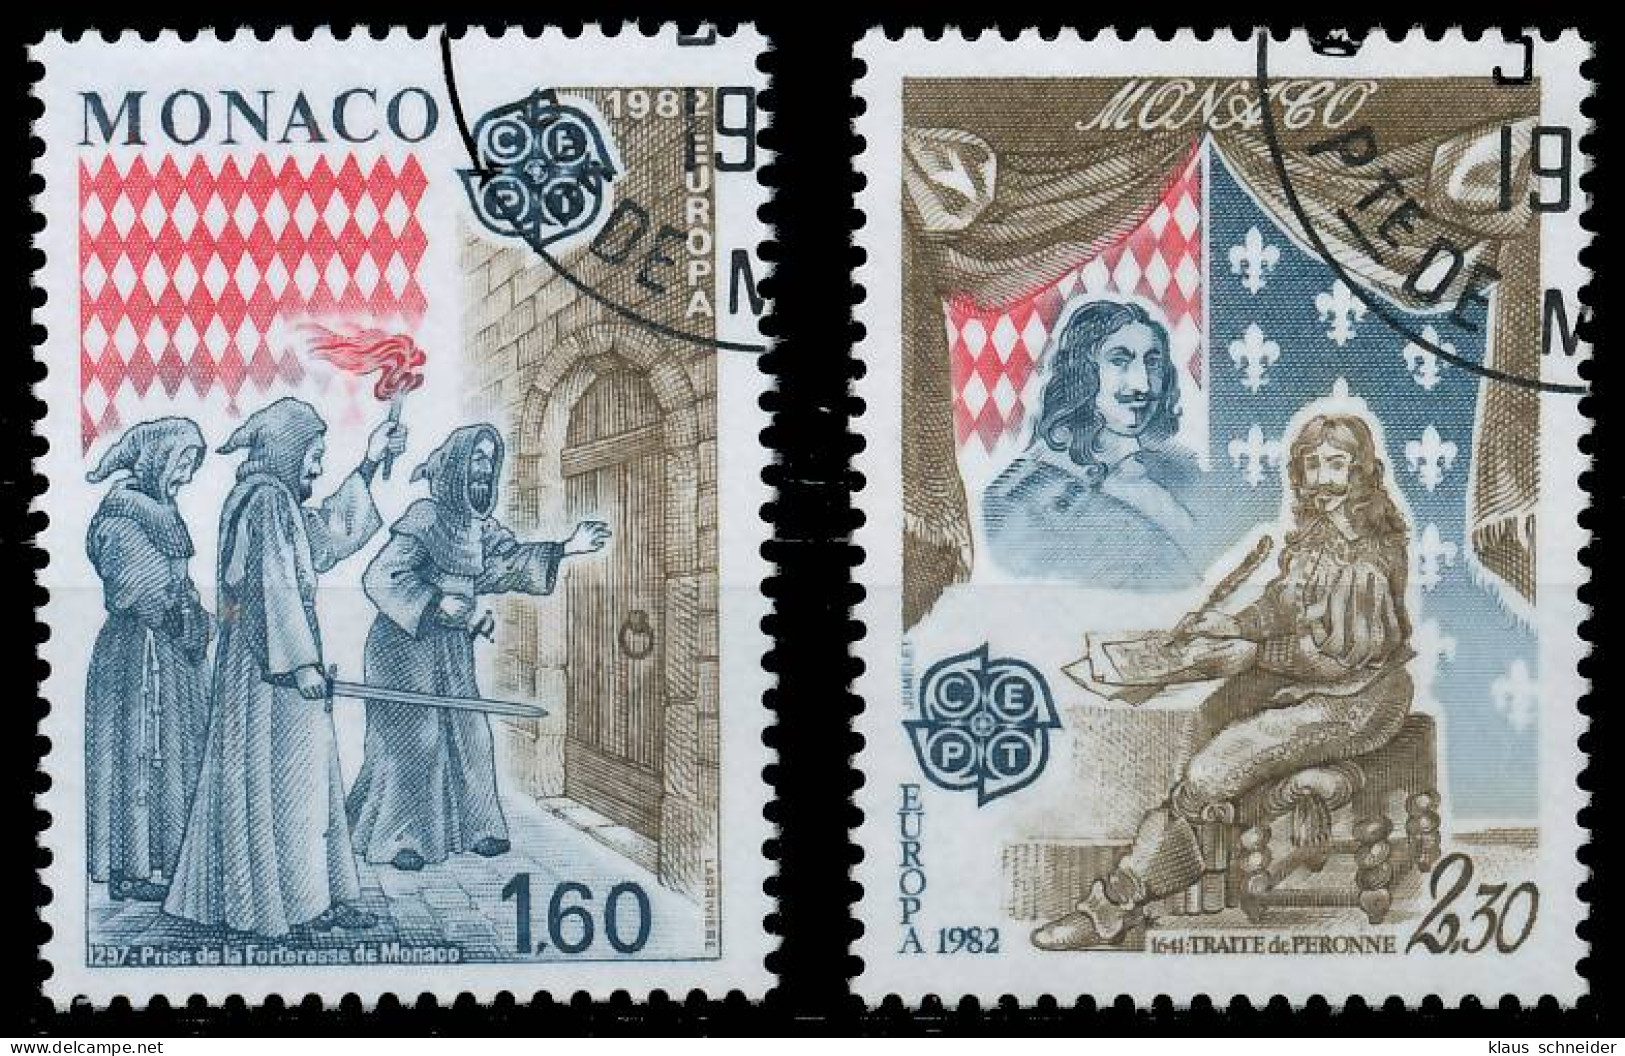 MONACO 1982 Nr 1526-1527 Gestempelt X5B54AE - Used Stamps